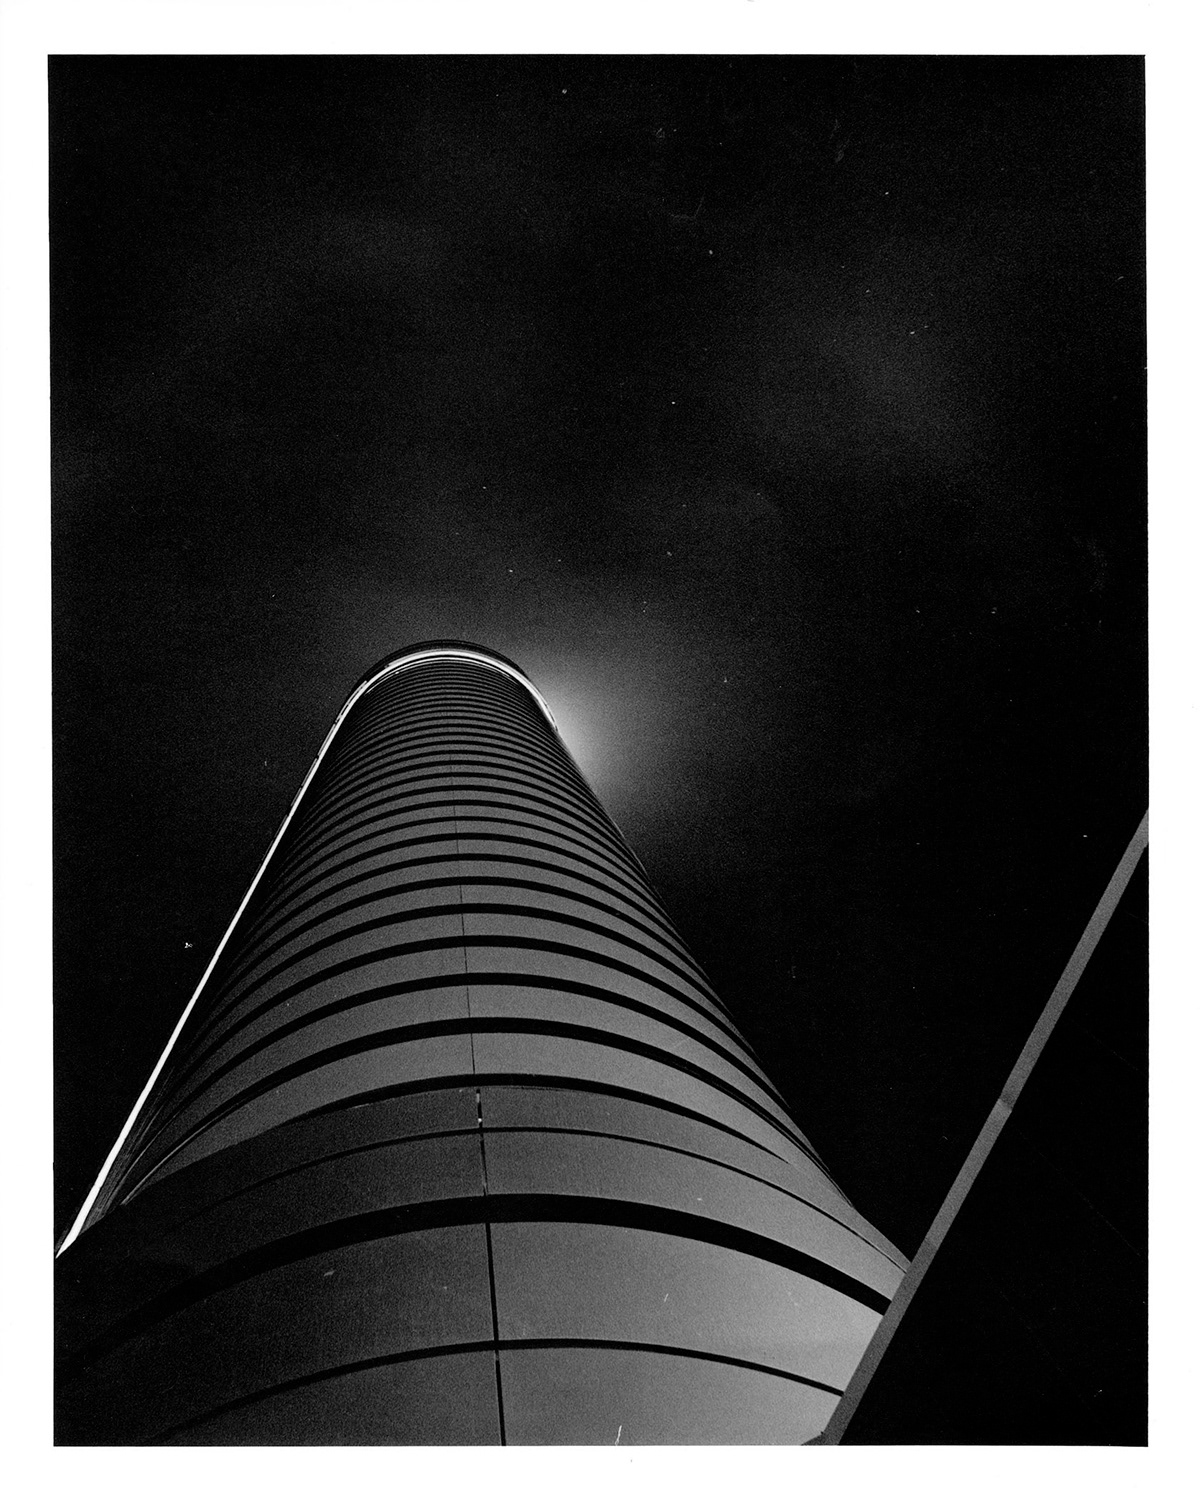 black and white 35mm film 120mm film medium format nikon f60 ILFORD ilford xp2 super 400 iso Kodak TMax 400 tmax kodak analogue photography film photography night photography grayscale